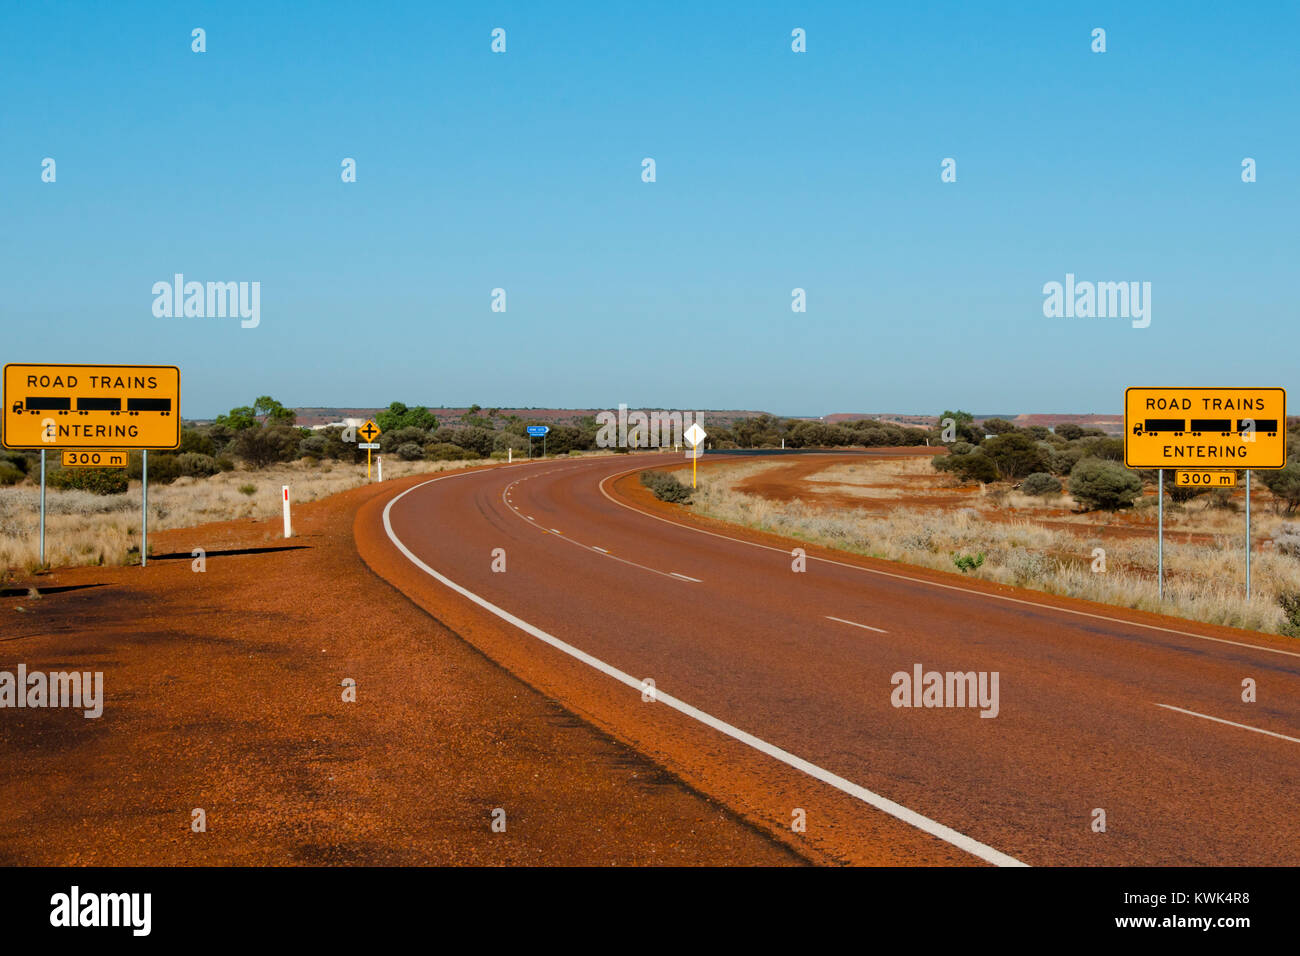 Road Trains Sign - Australia Stock Photo